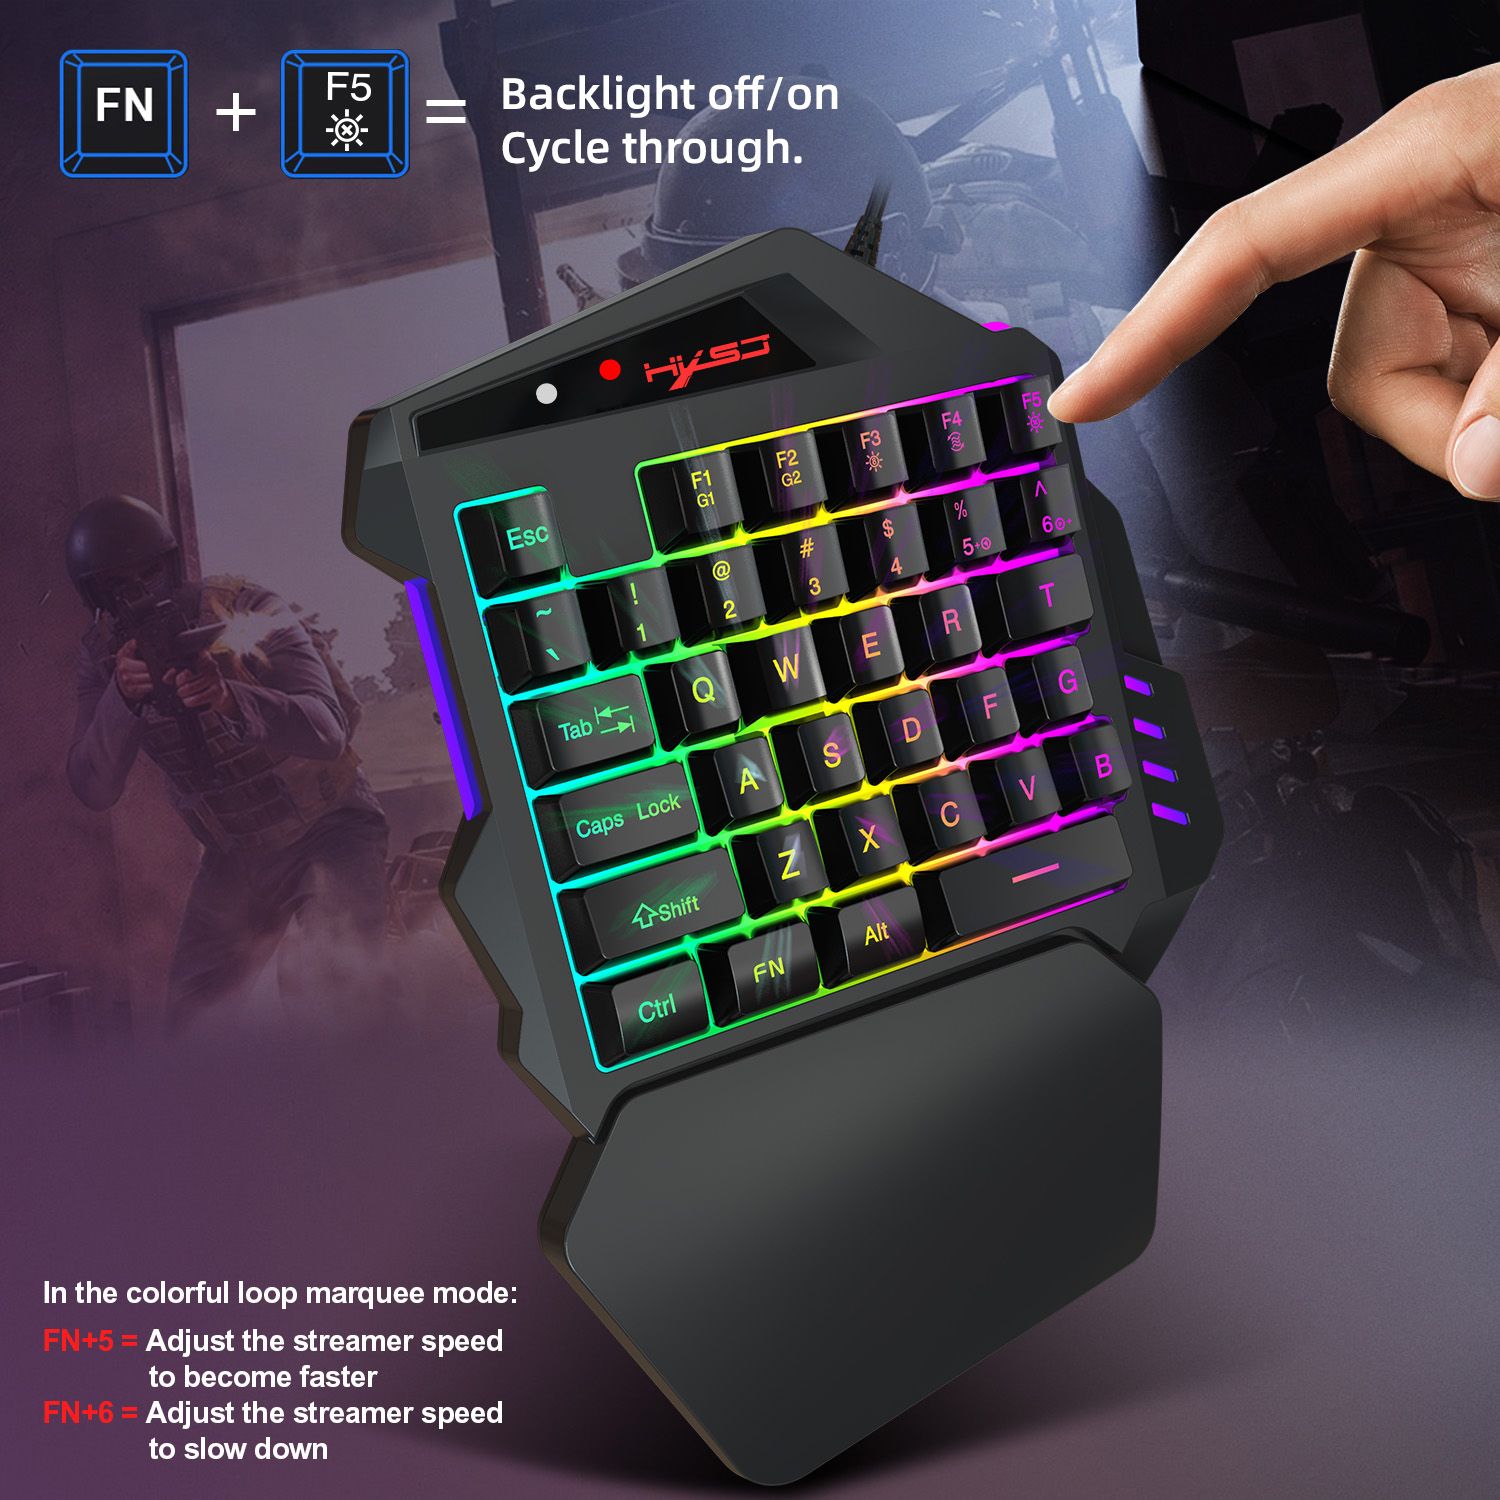 HXSJ-V500-One-handed-Gaming-Keyboard-35-Keys-RGB-Backlight-Bulit-in-Converter-Single-hand-Keyboard-F-1747796